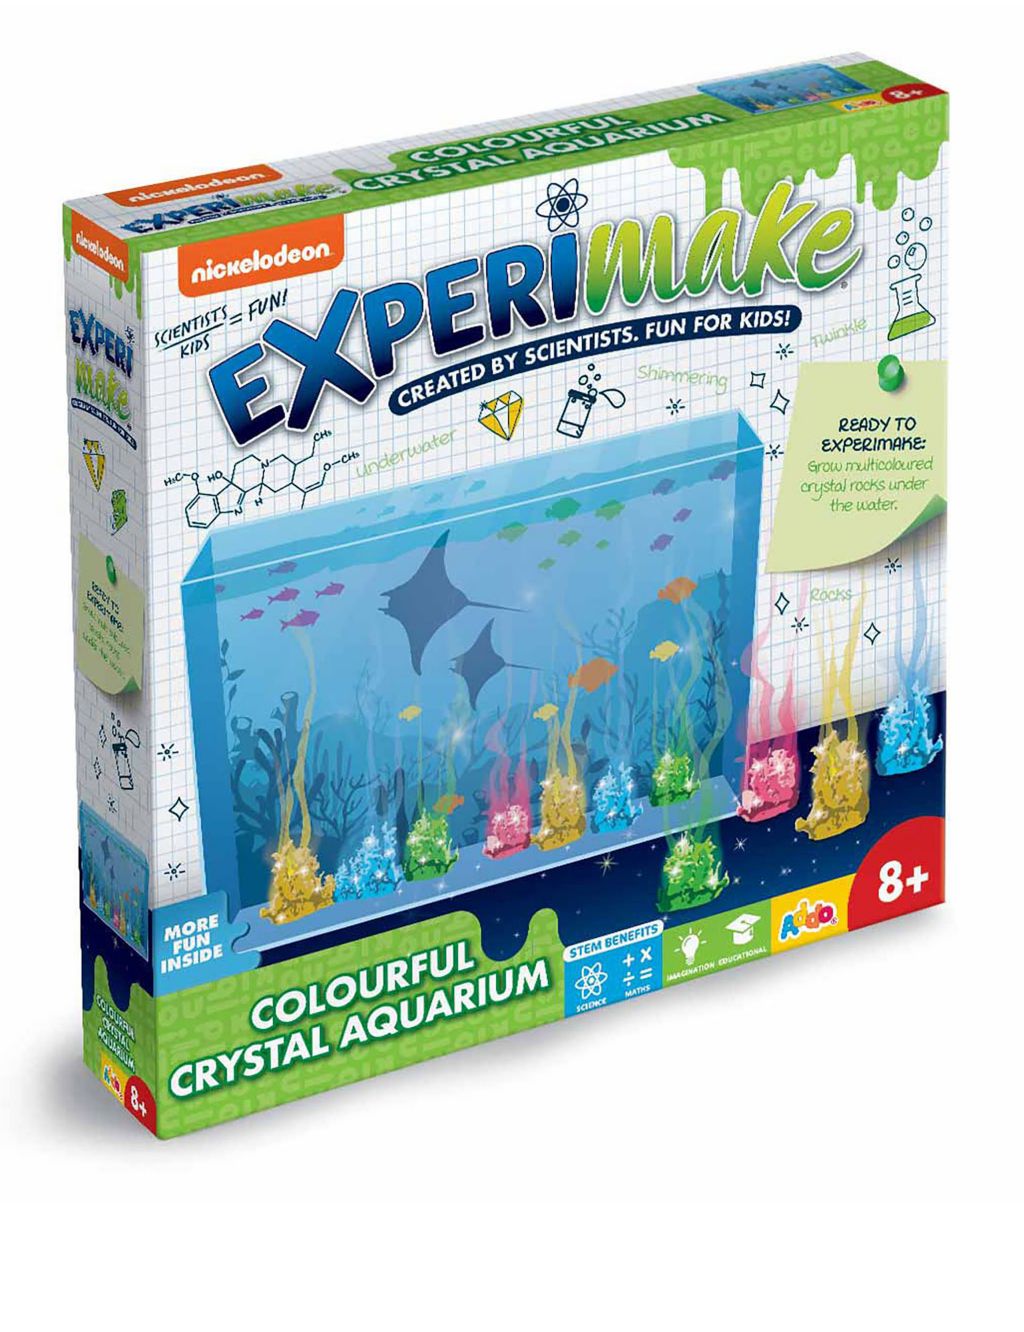 Nickelodeon Experimake Crystal Aquarium (8+ Yrs)